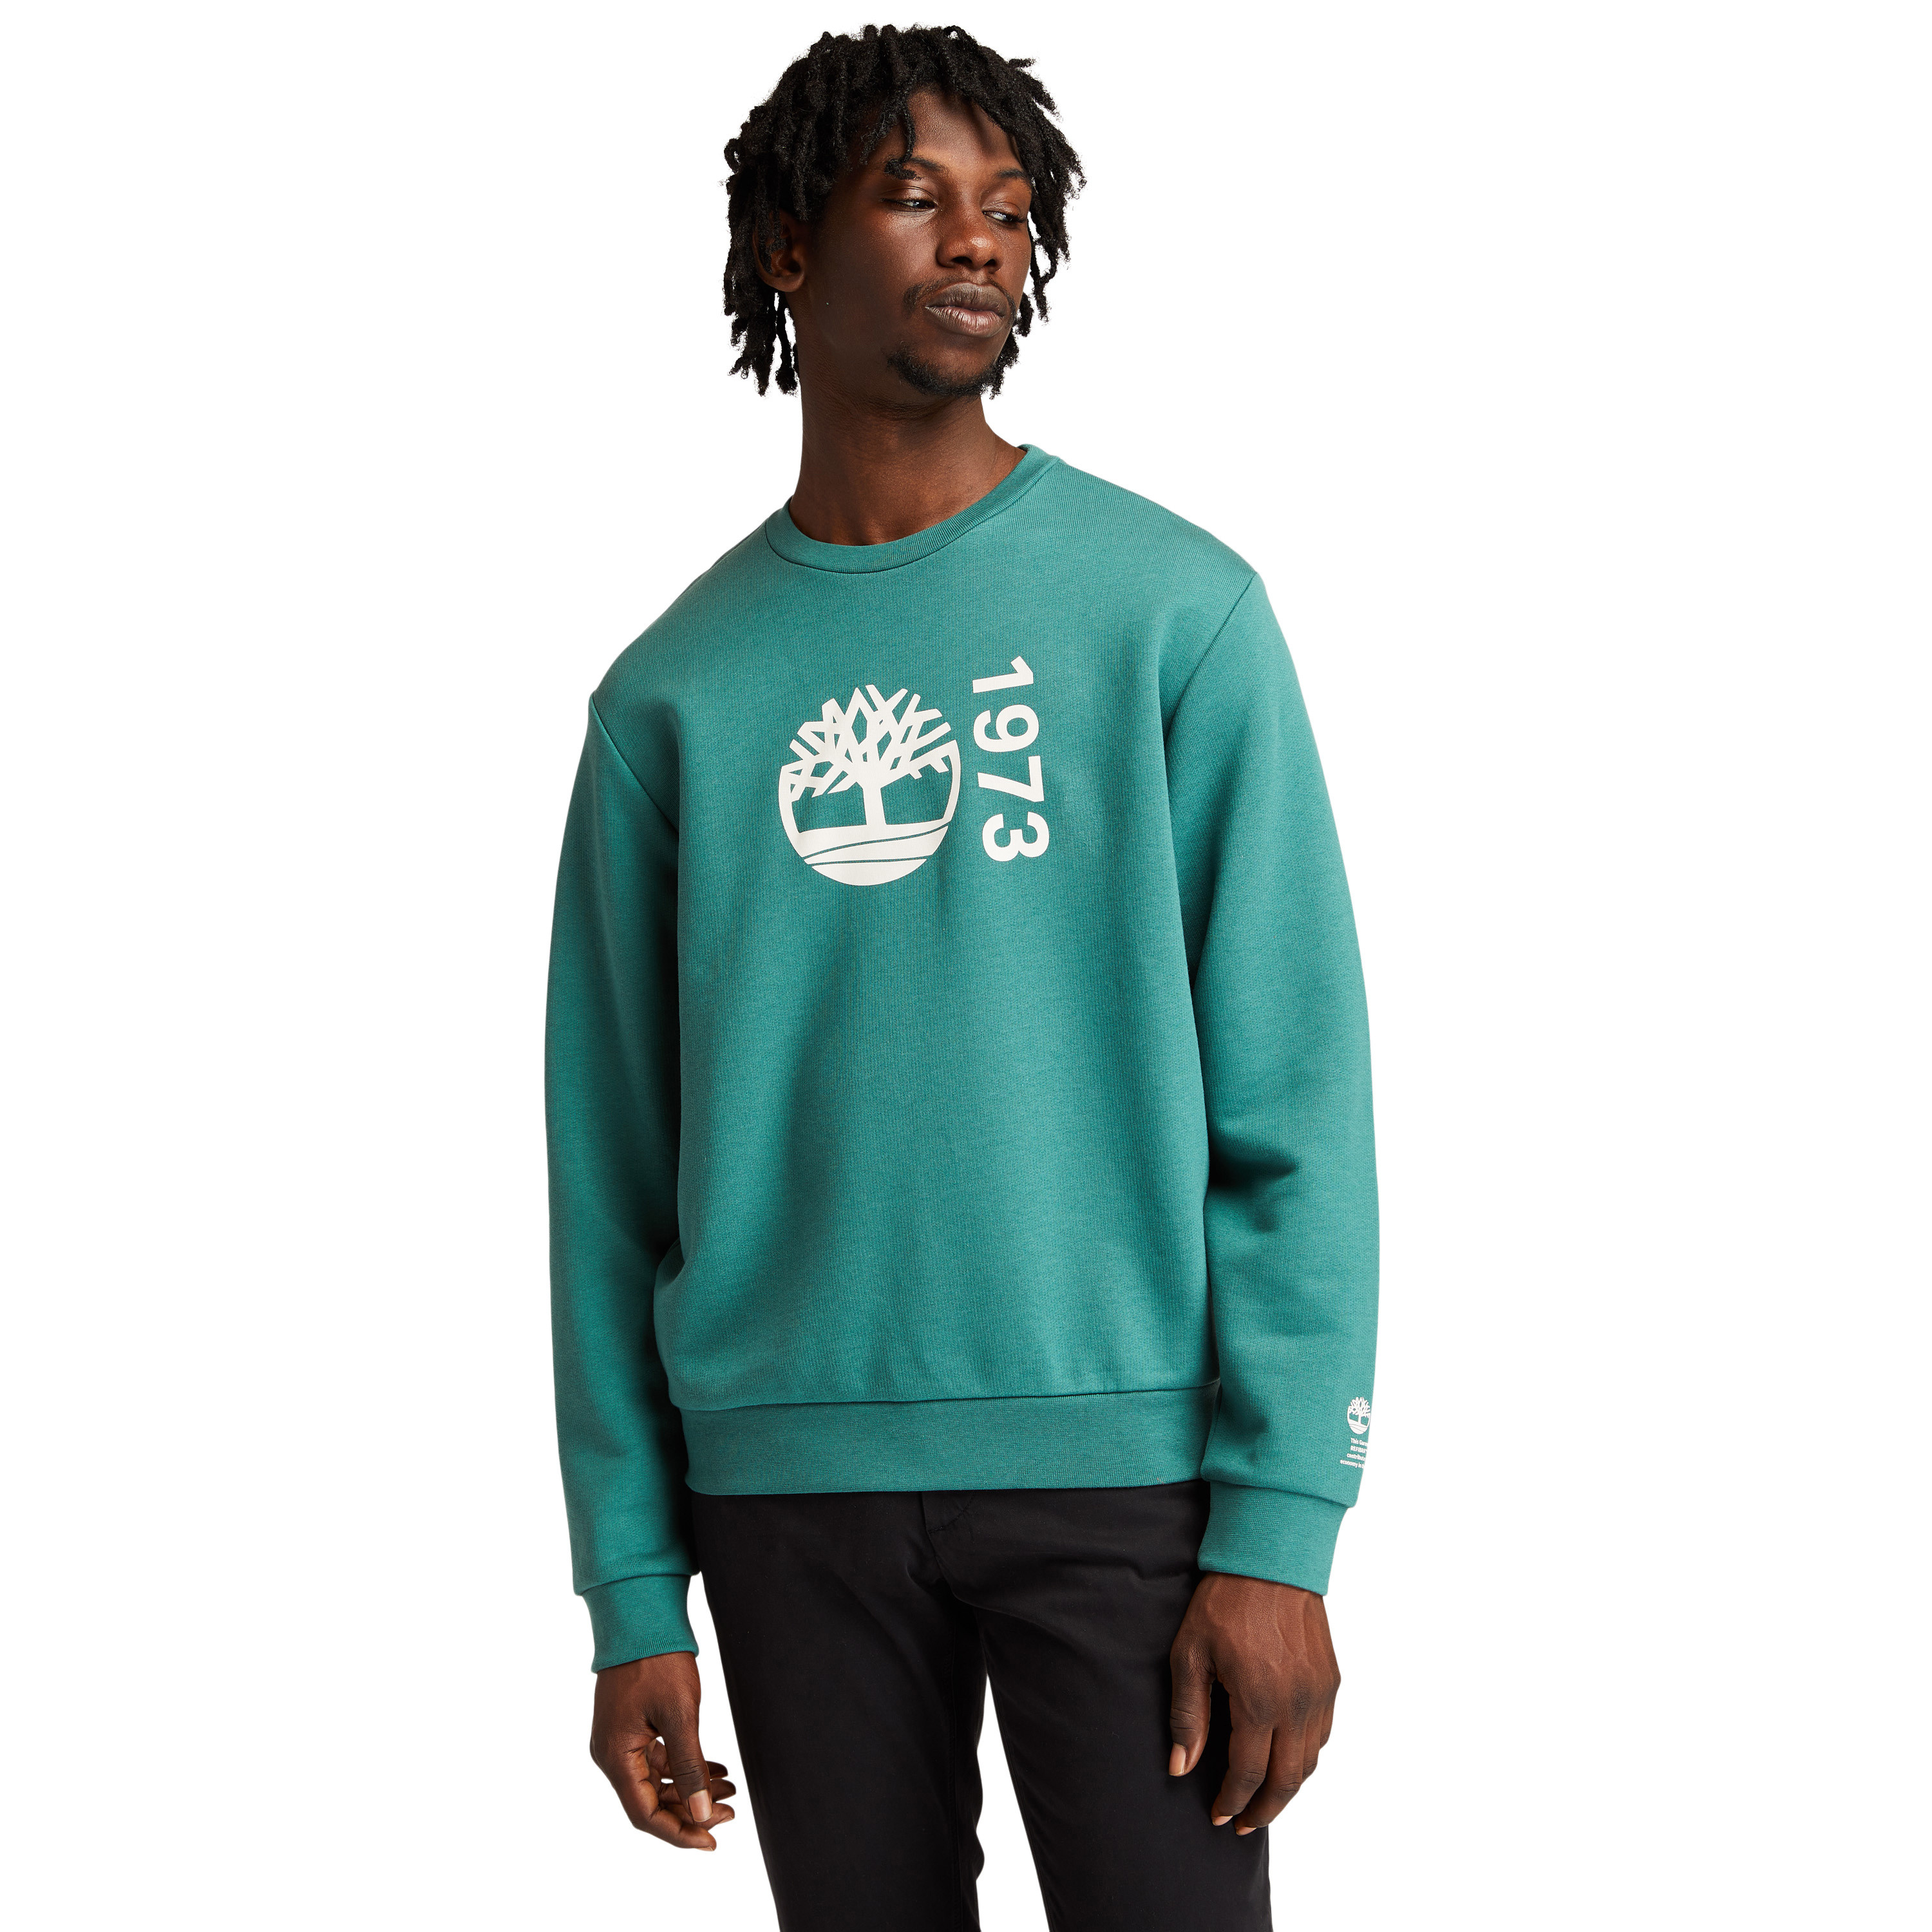 Re-Comfort EK+ sweatshirt for men, Green, large image number 3